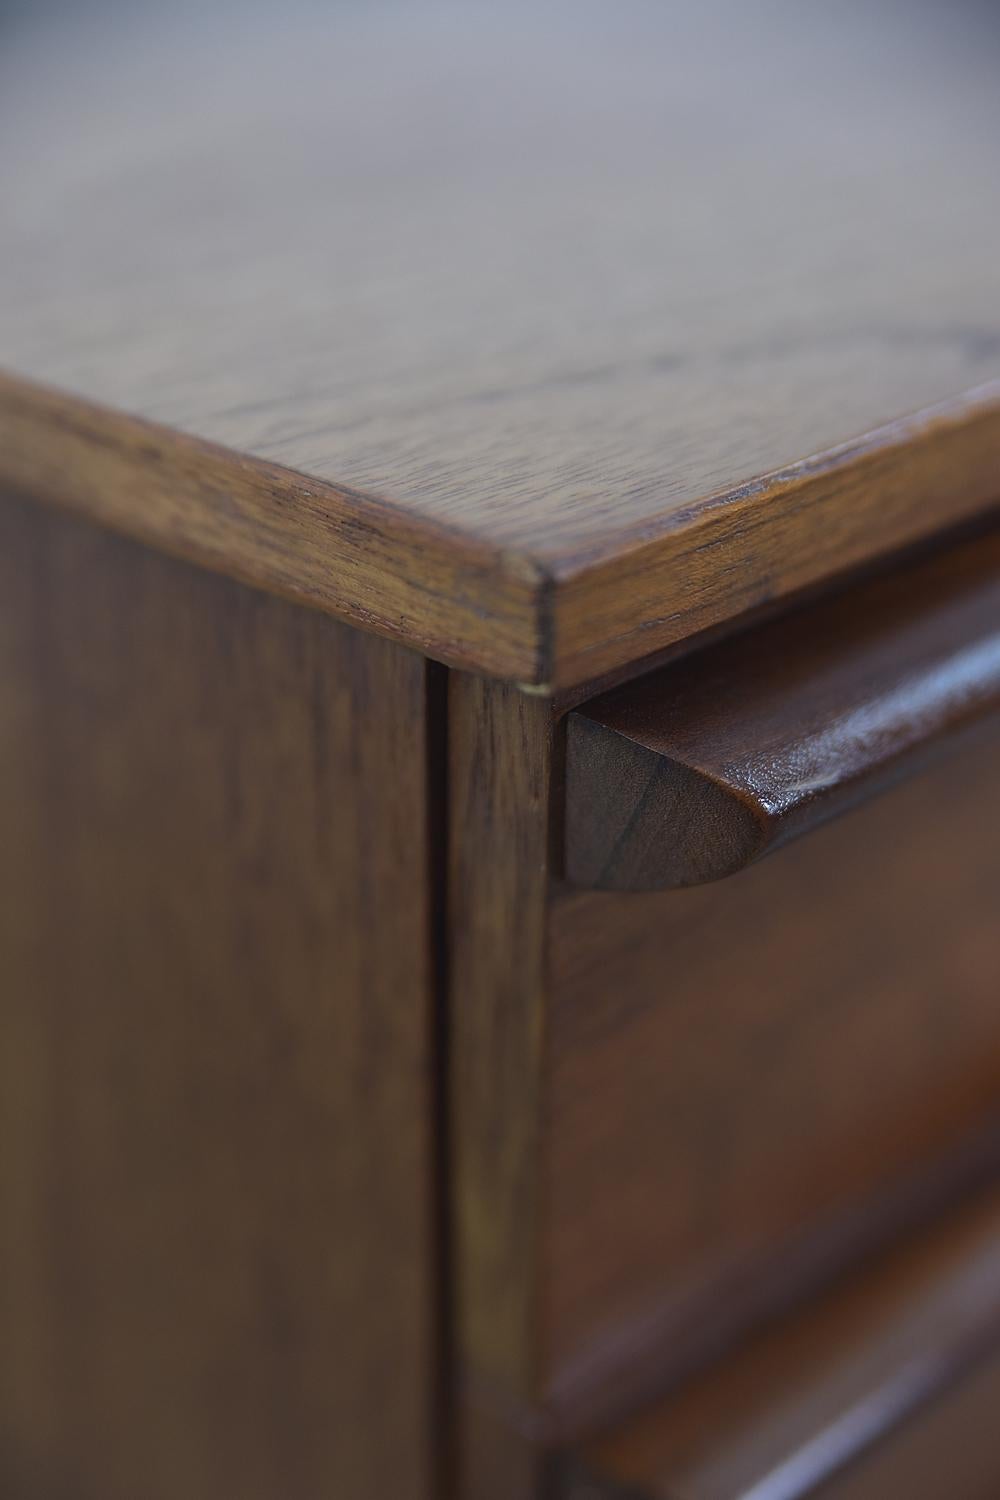 Vintage Midcentury Danish Modern Teak Wood Desk from Avalon, 1960s For Sale 6